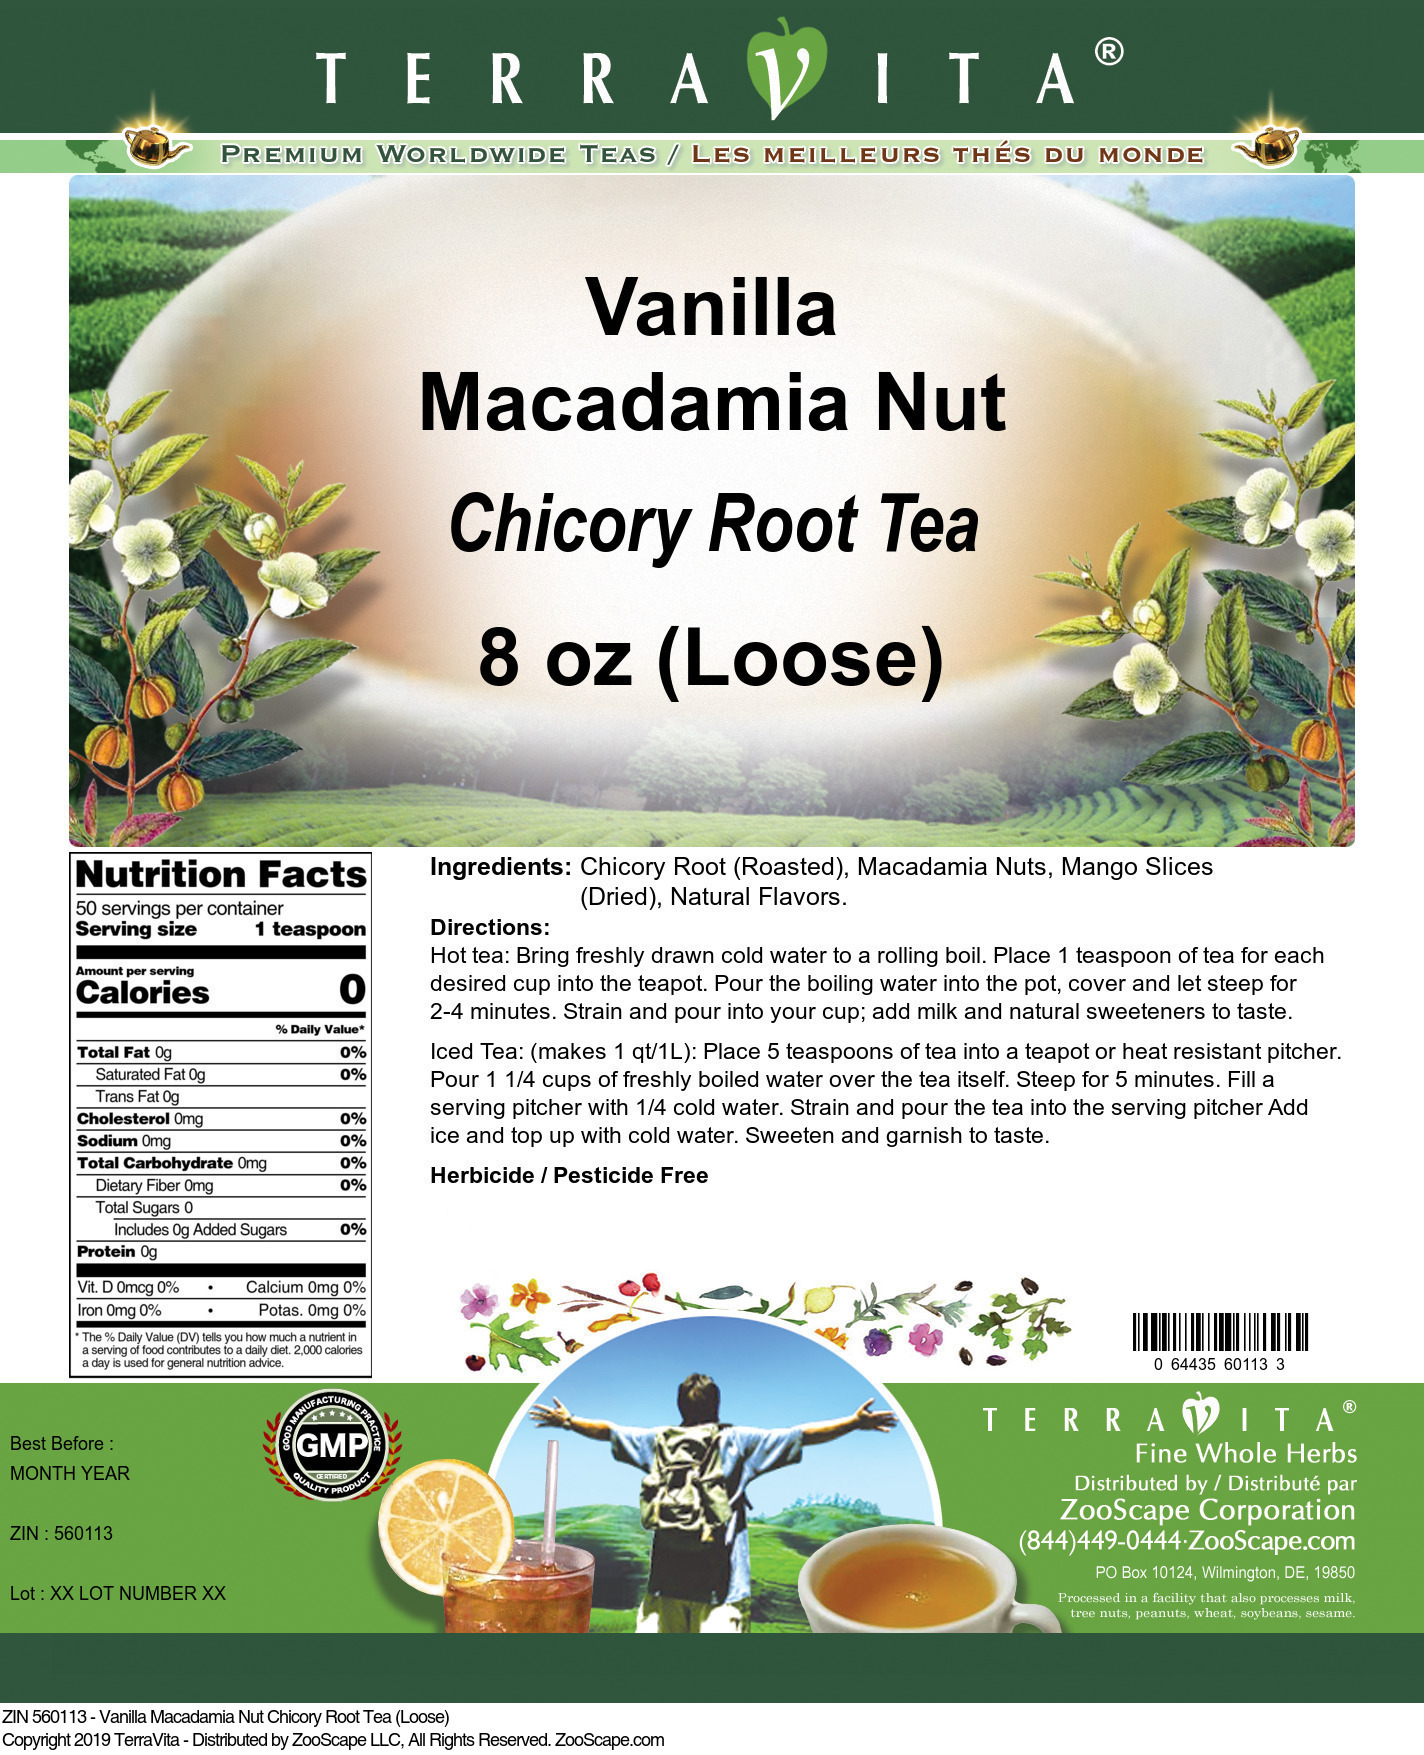 Vanilla Macadamia Nut Chicory Root Tea (Loose) - Label